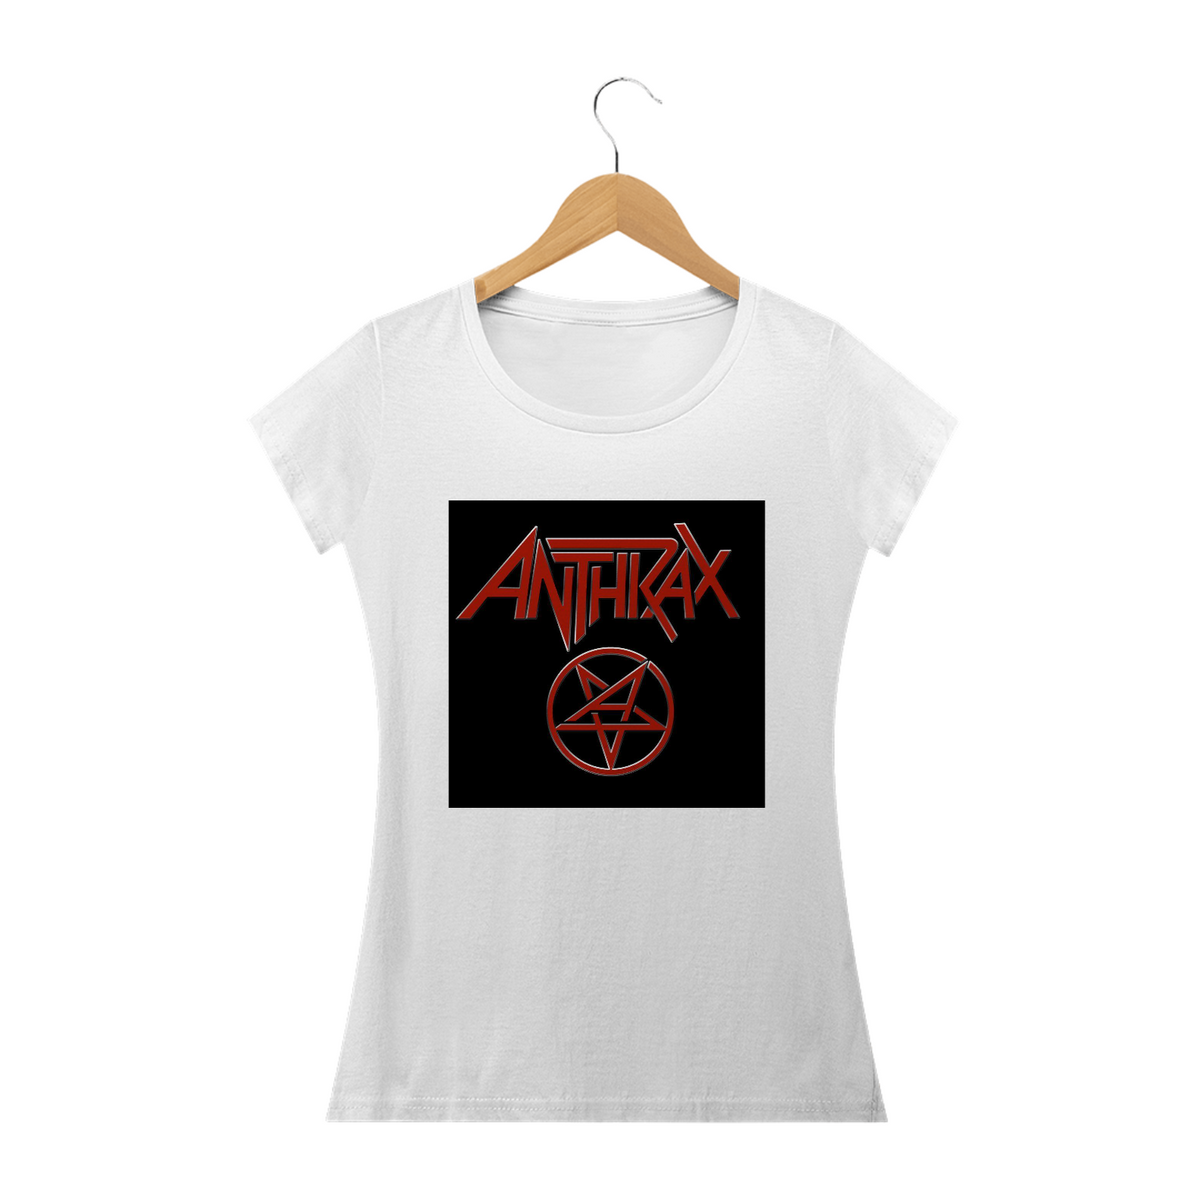 Nome do produto: Anthrax